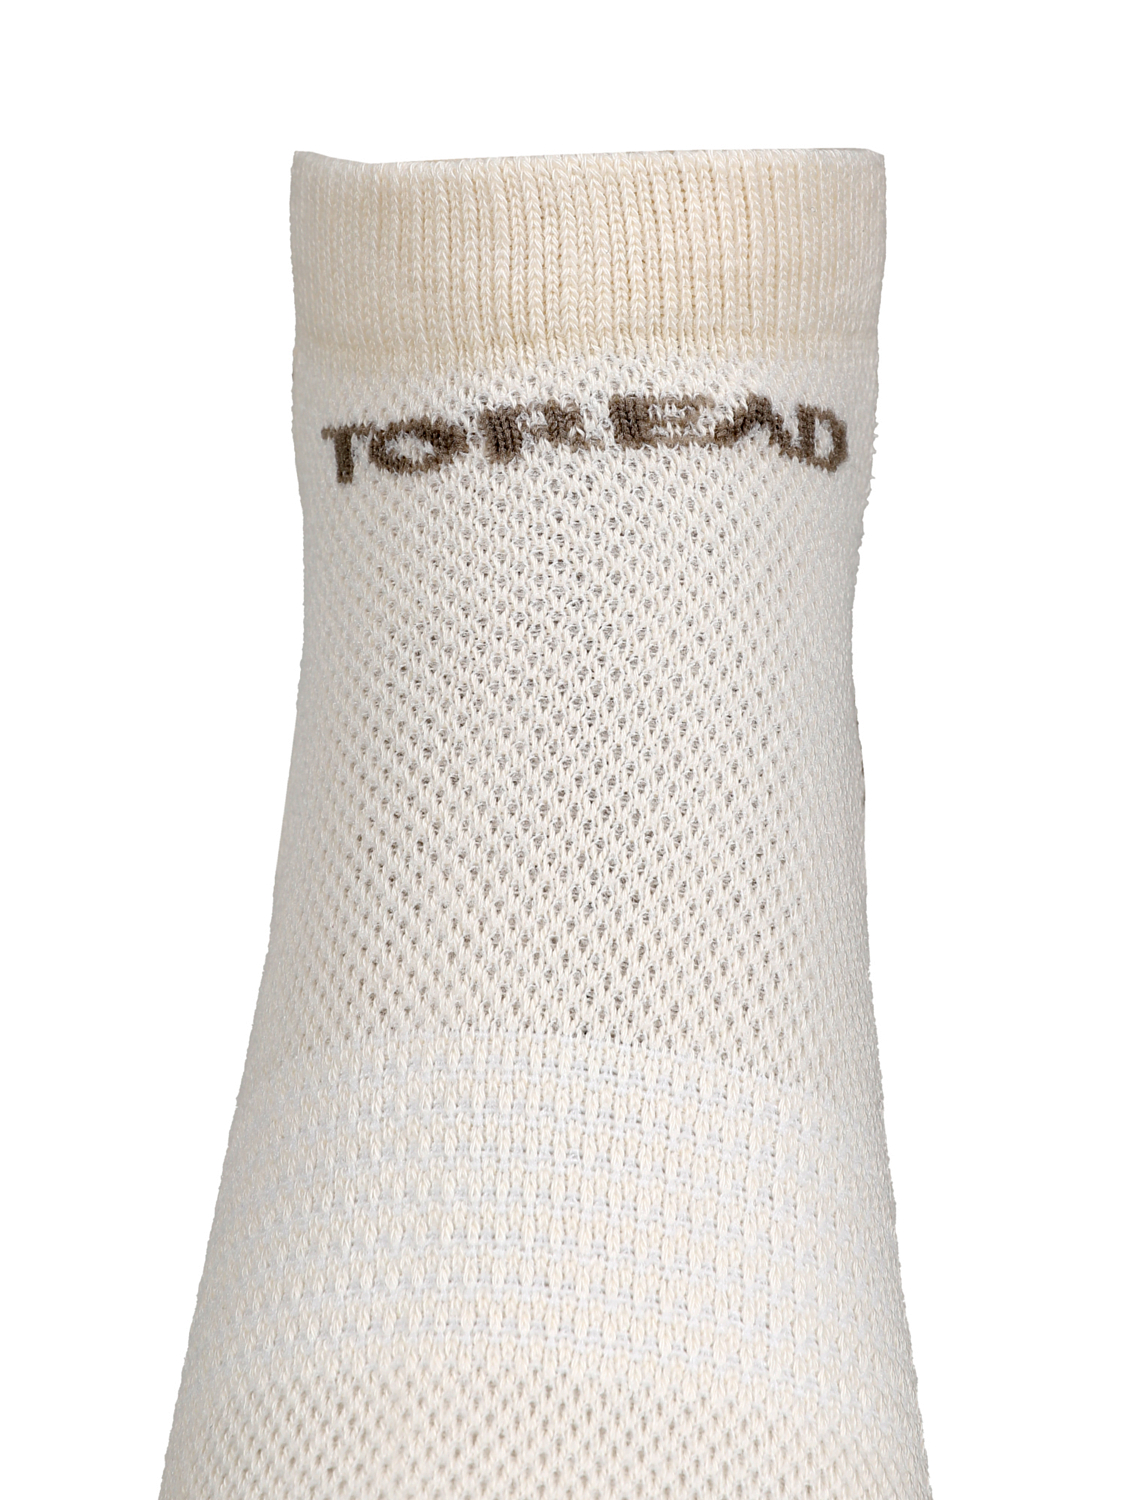 Носки Toread Silver ion low waist socks Beige